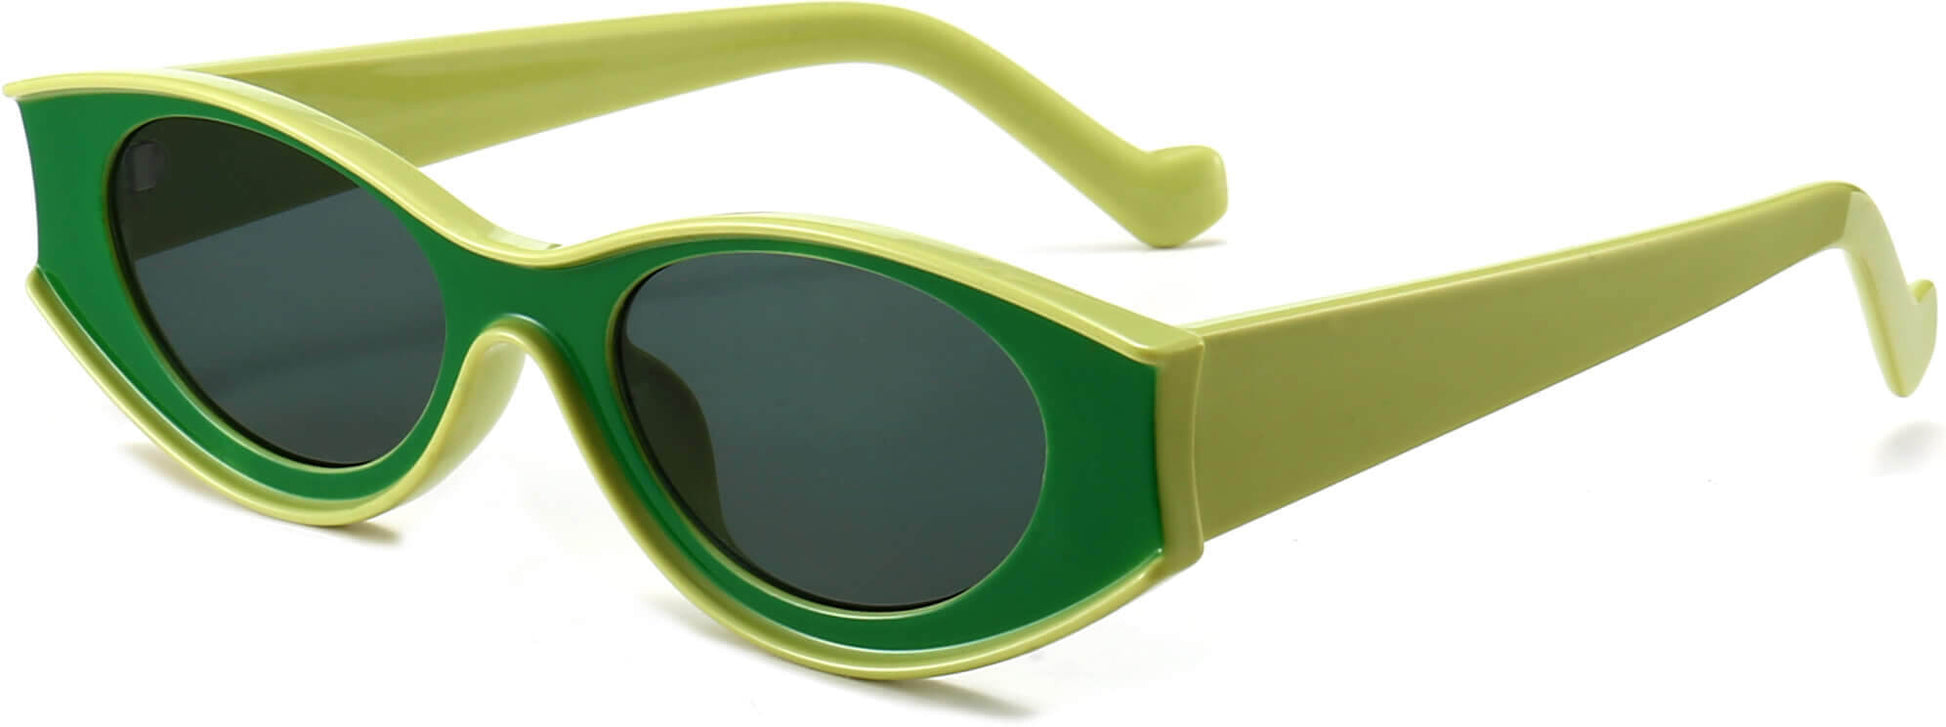 Hot Green Plastic Sunglasses from ANRRI